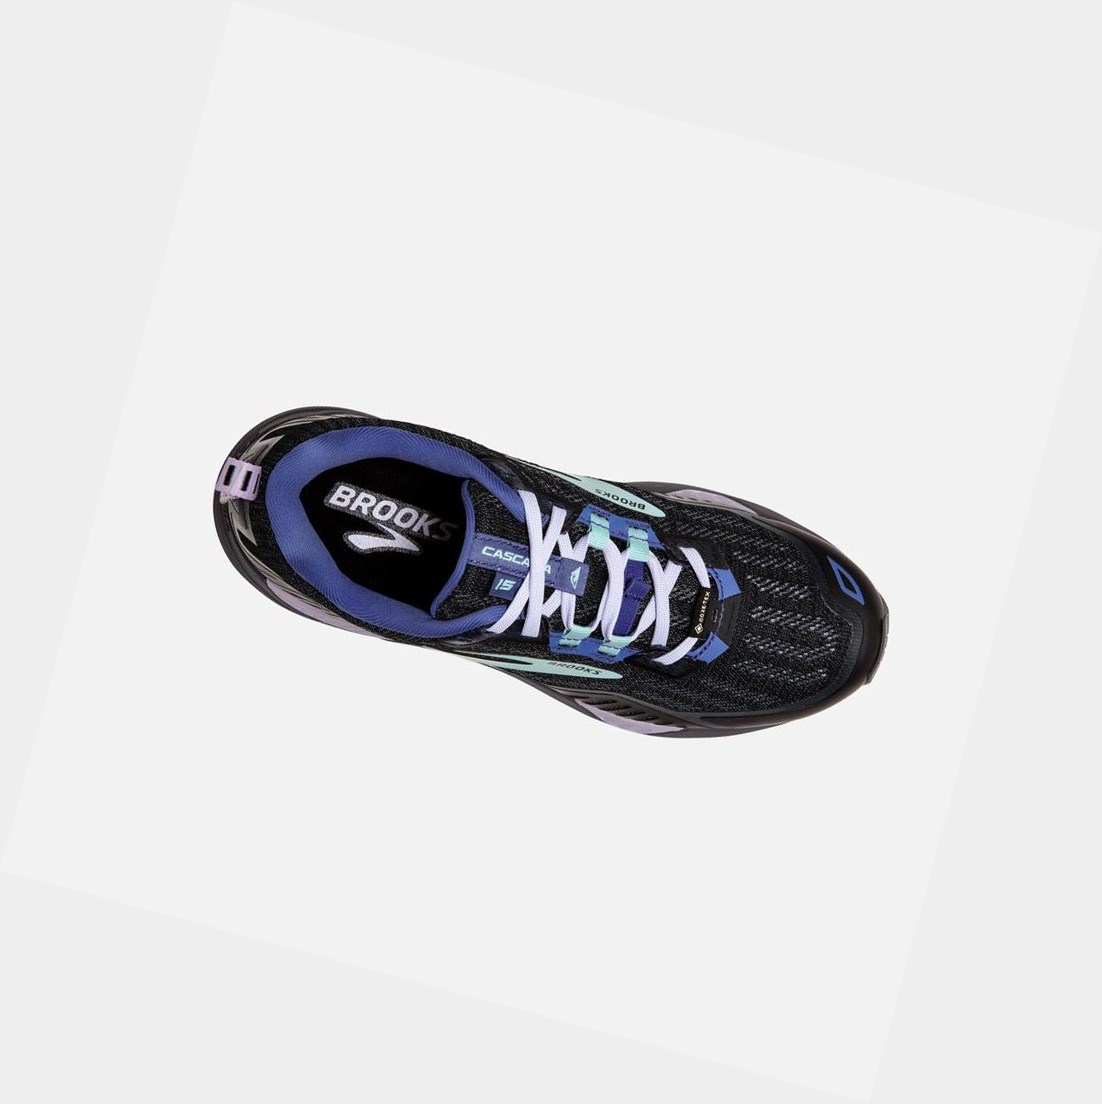 Brooks Cascadia 15 GTX Women's Trail Shoes Black / Marlin / Blue | AMTF-72154